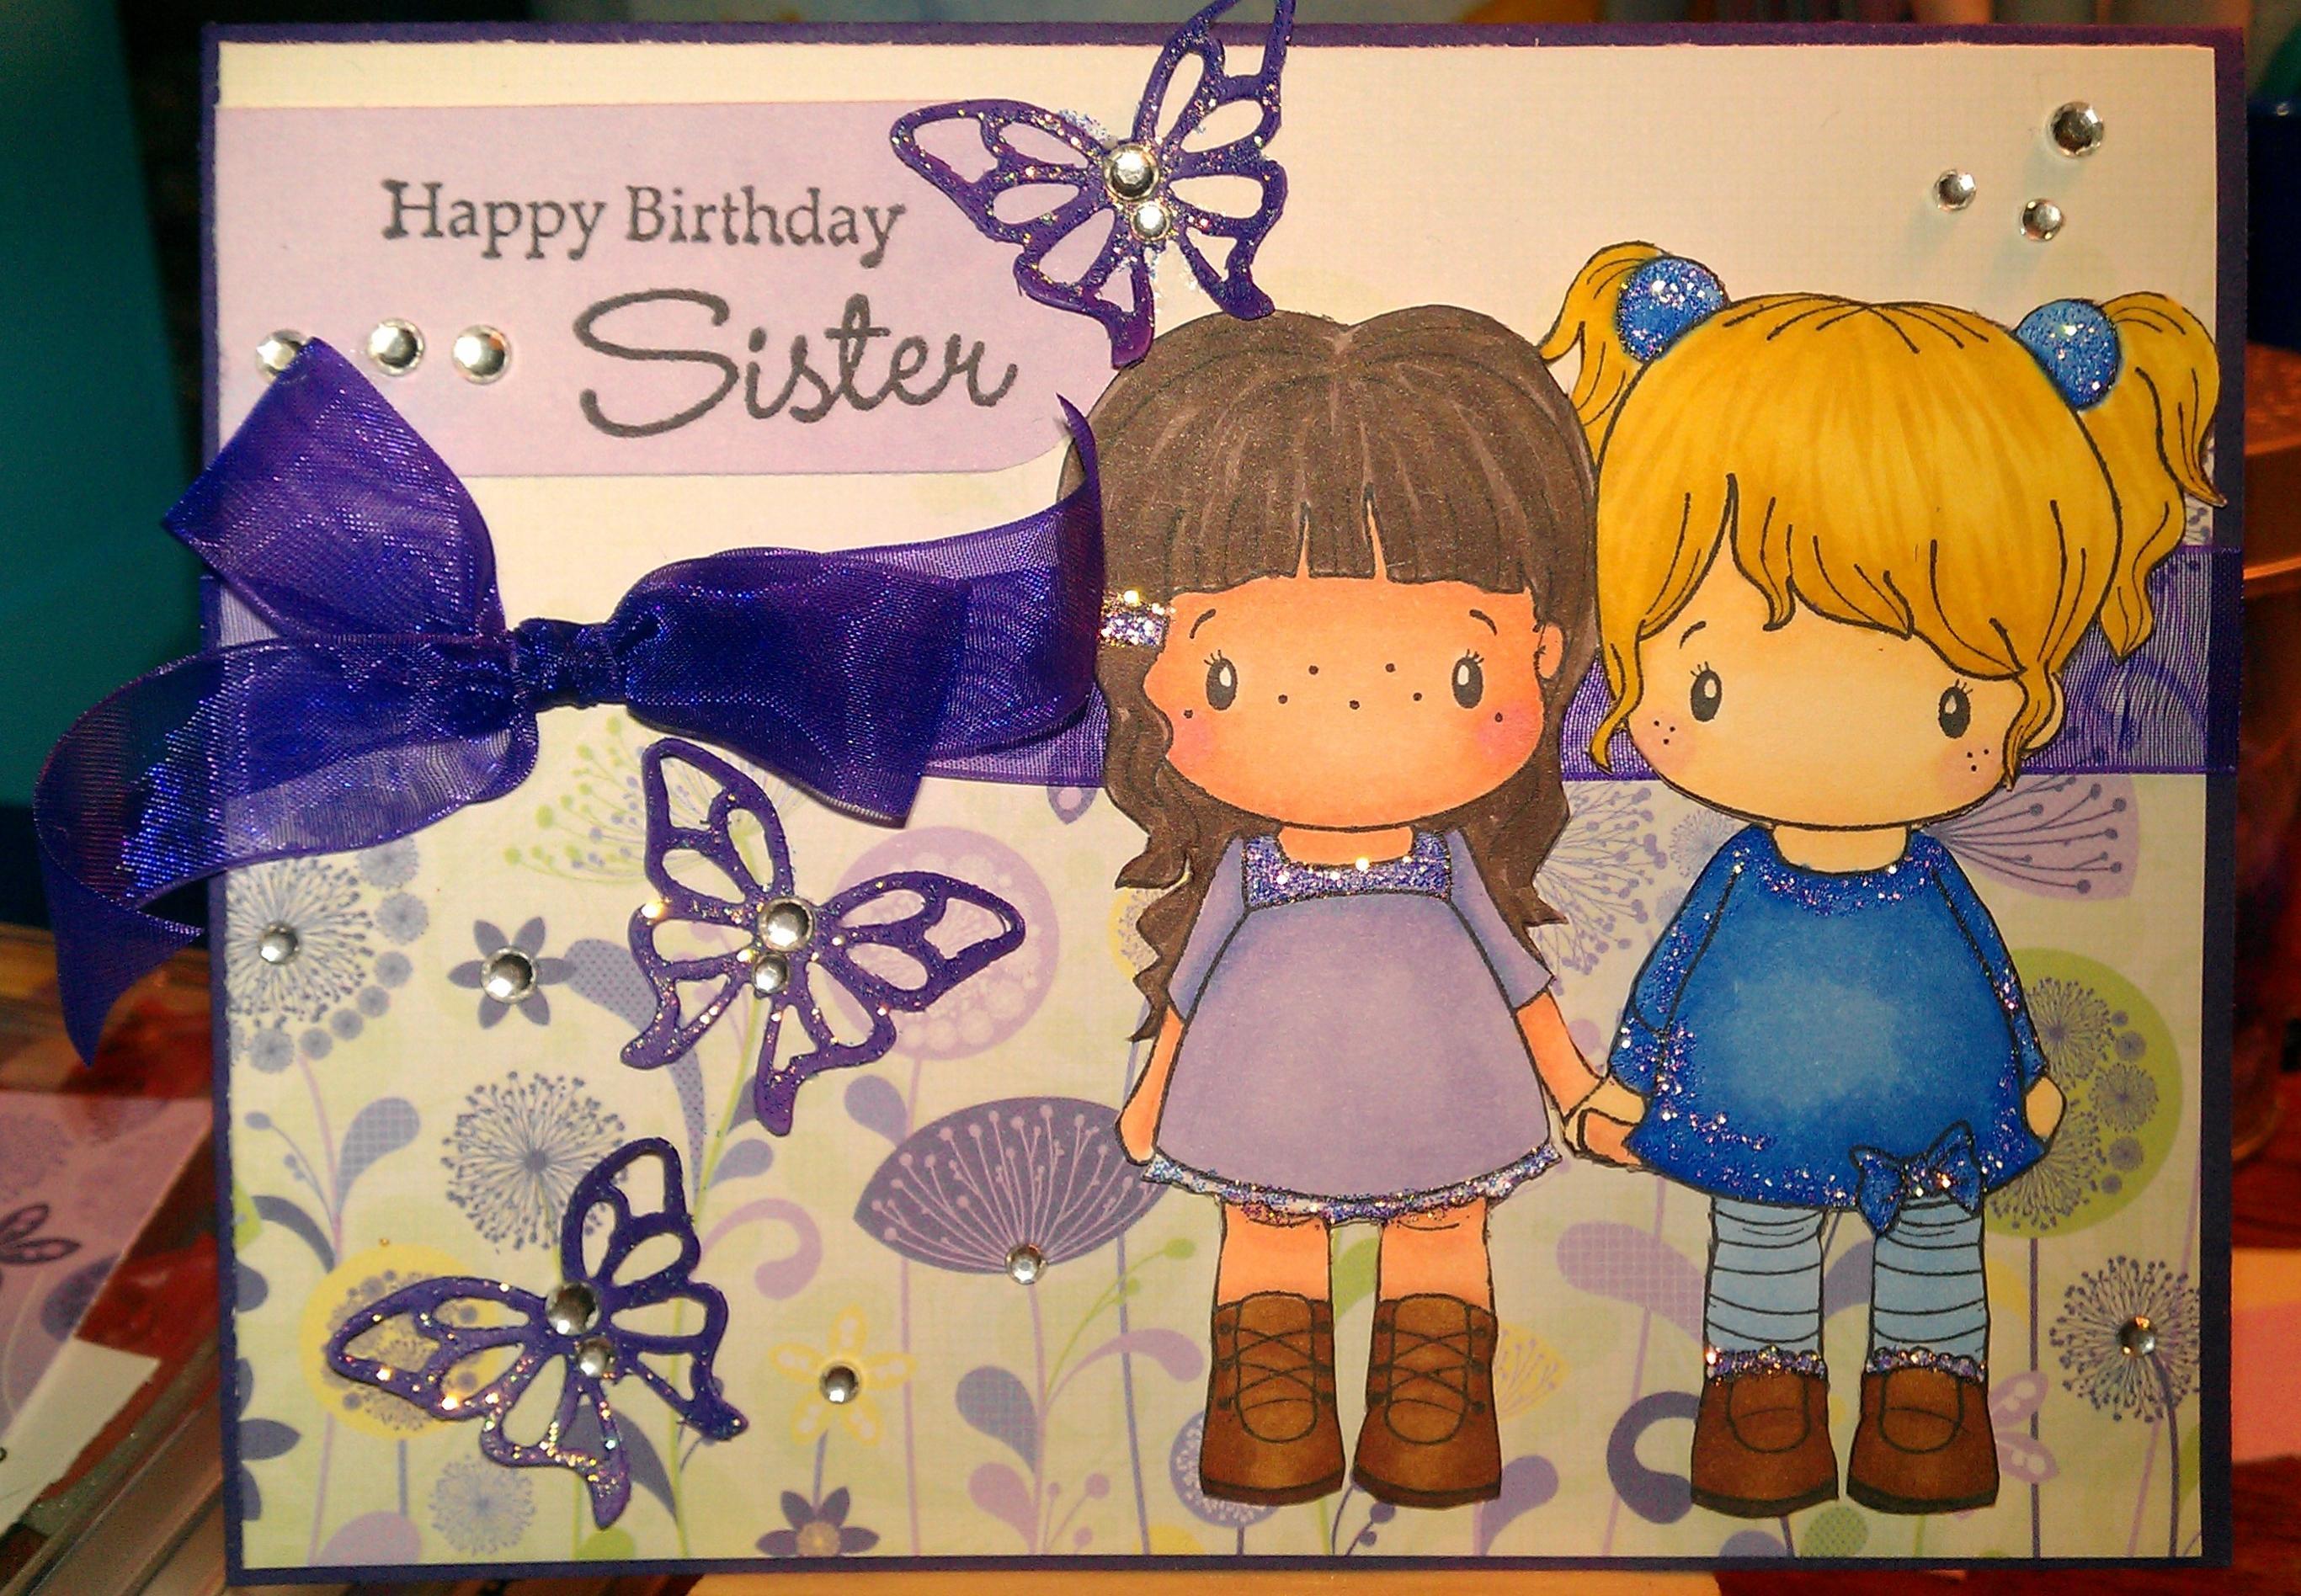 Happy Birthday Little Sister!